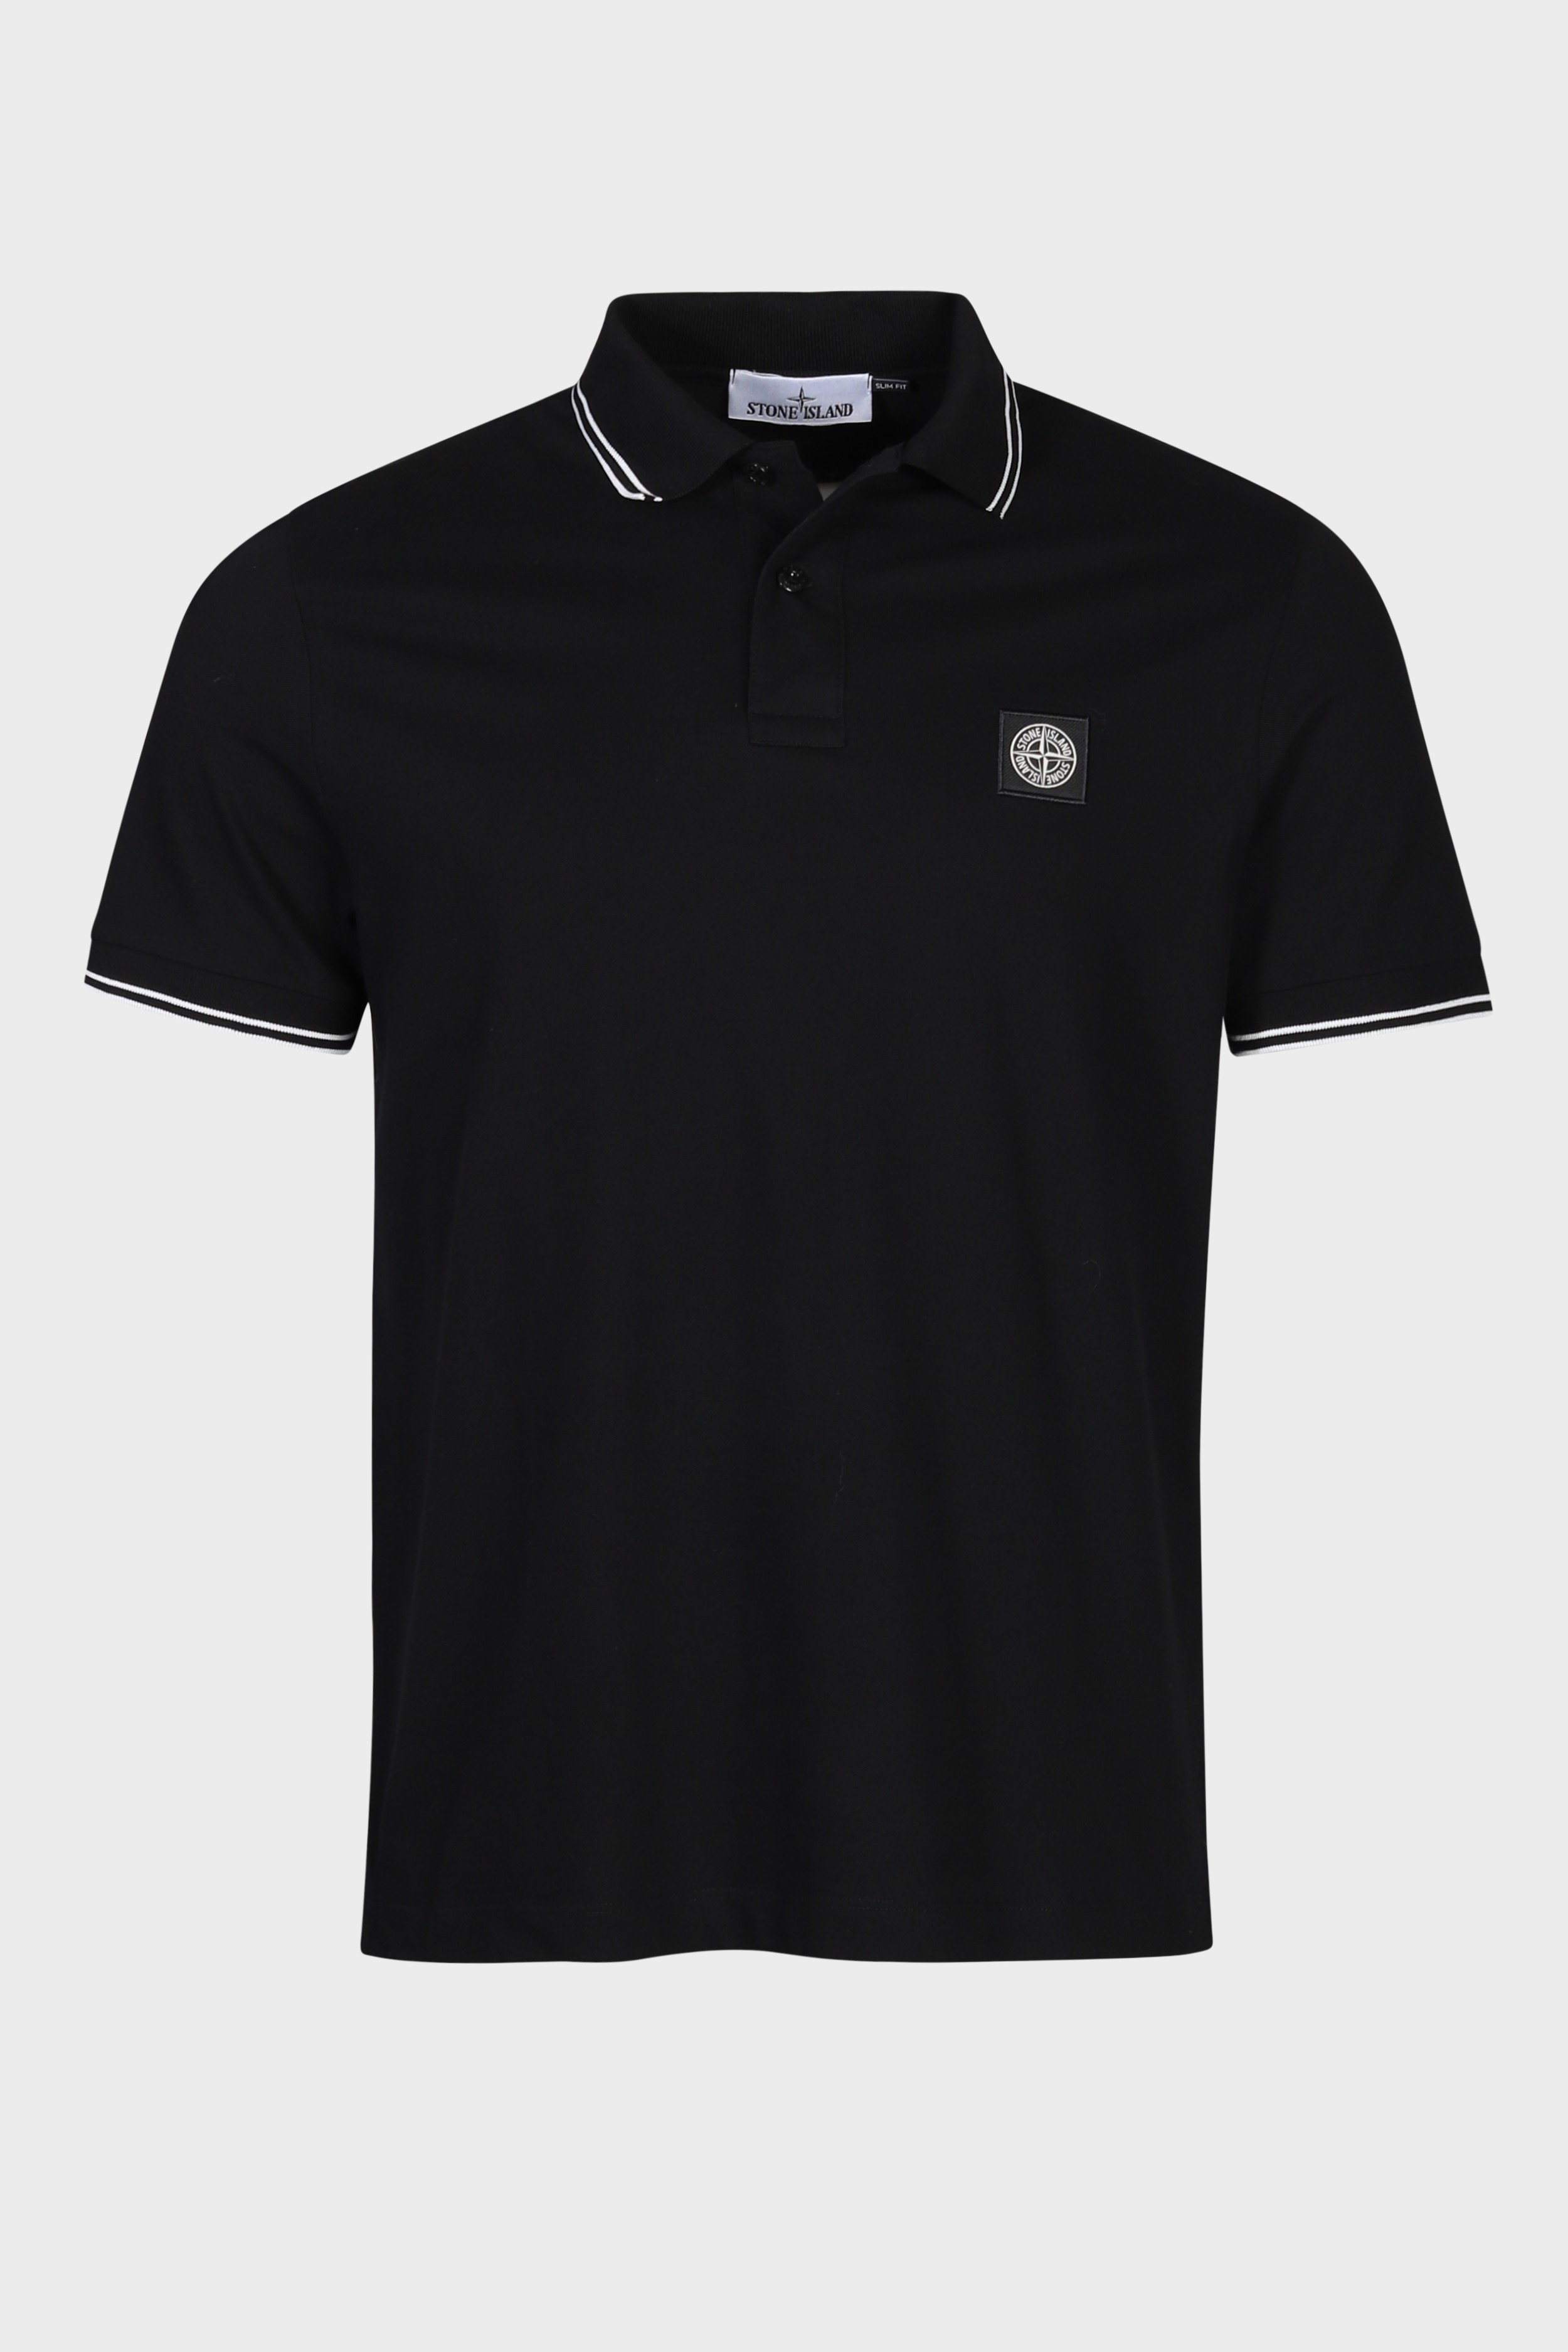 STONE ISLAND Slim Fit Polo Shirt in Black M